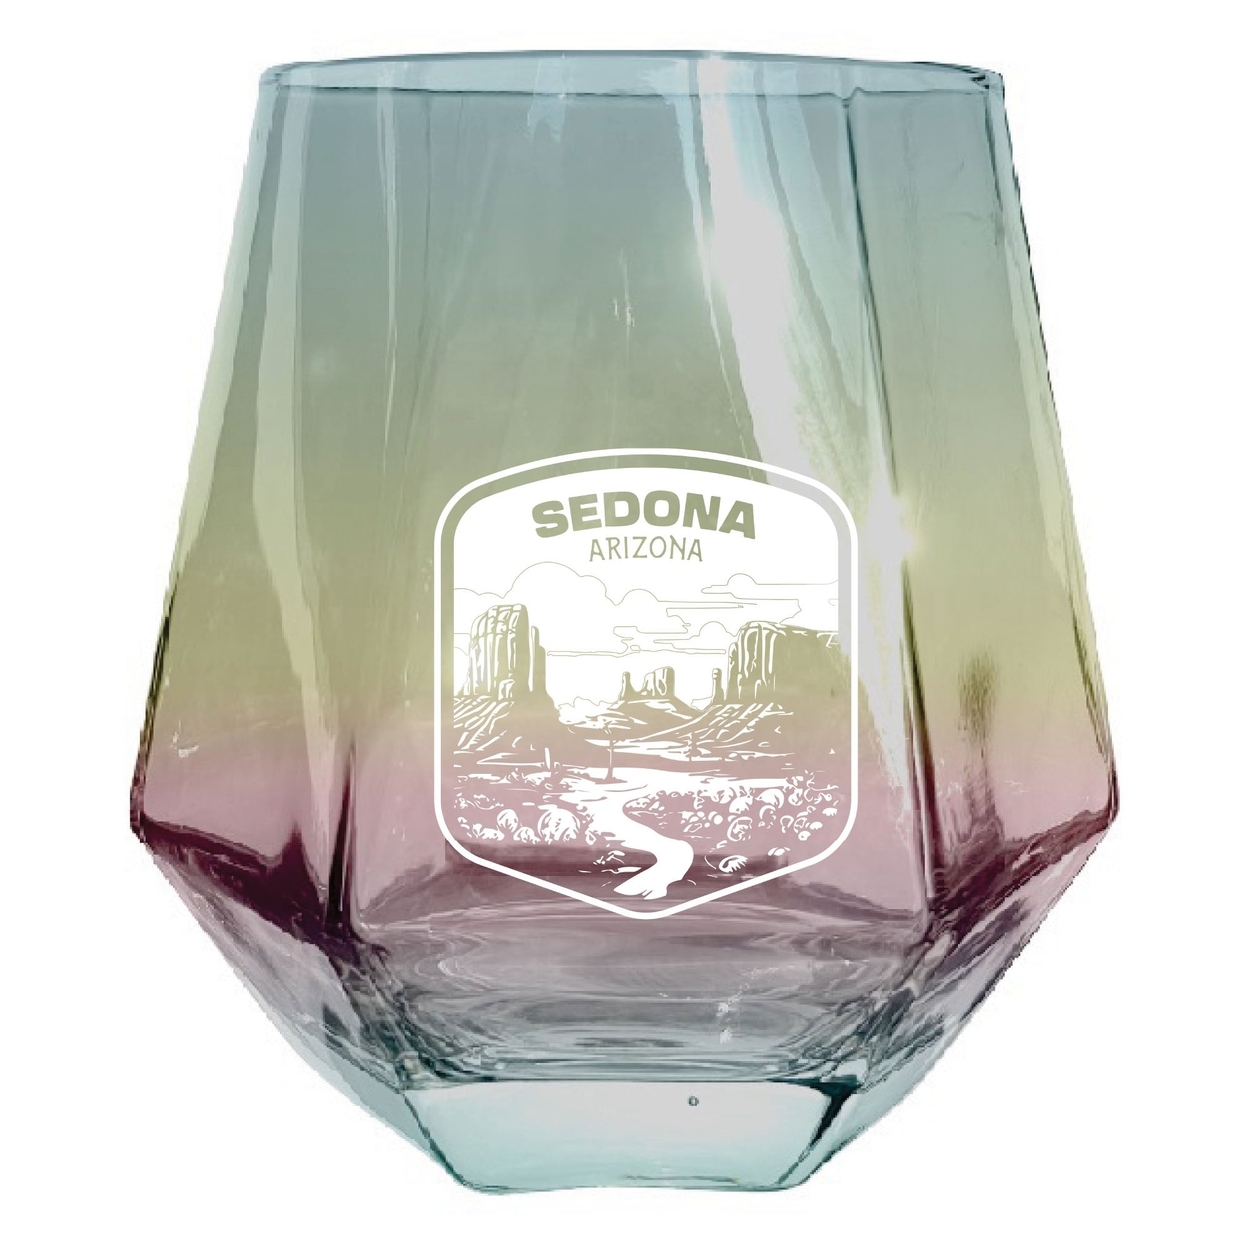 Sedona Arizona Souvenir Wine Glass EngravedDiamond 15 Oz Clear Iridescent - Iridescent,,Single Unit